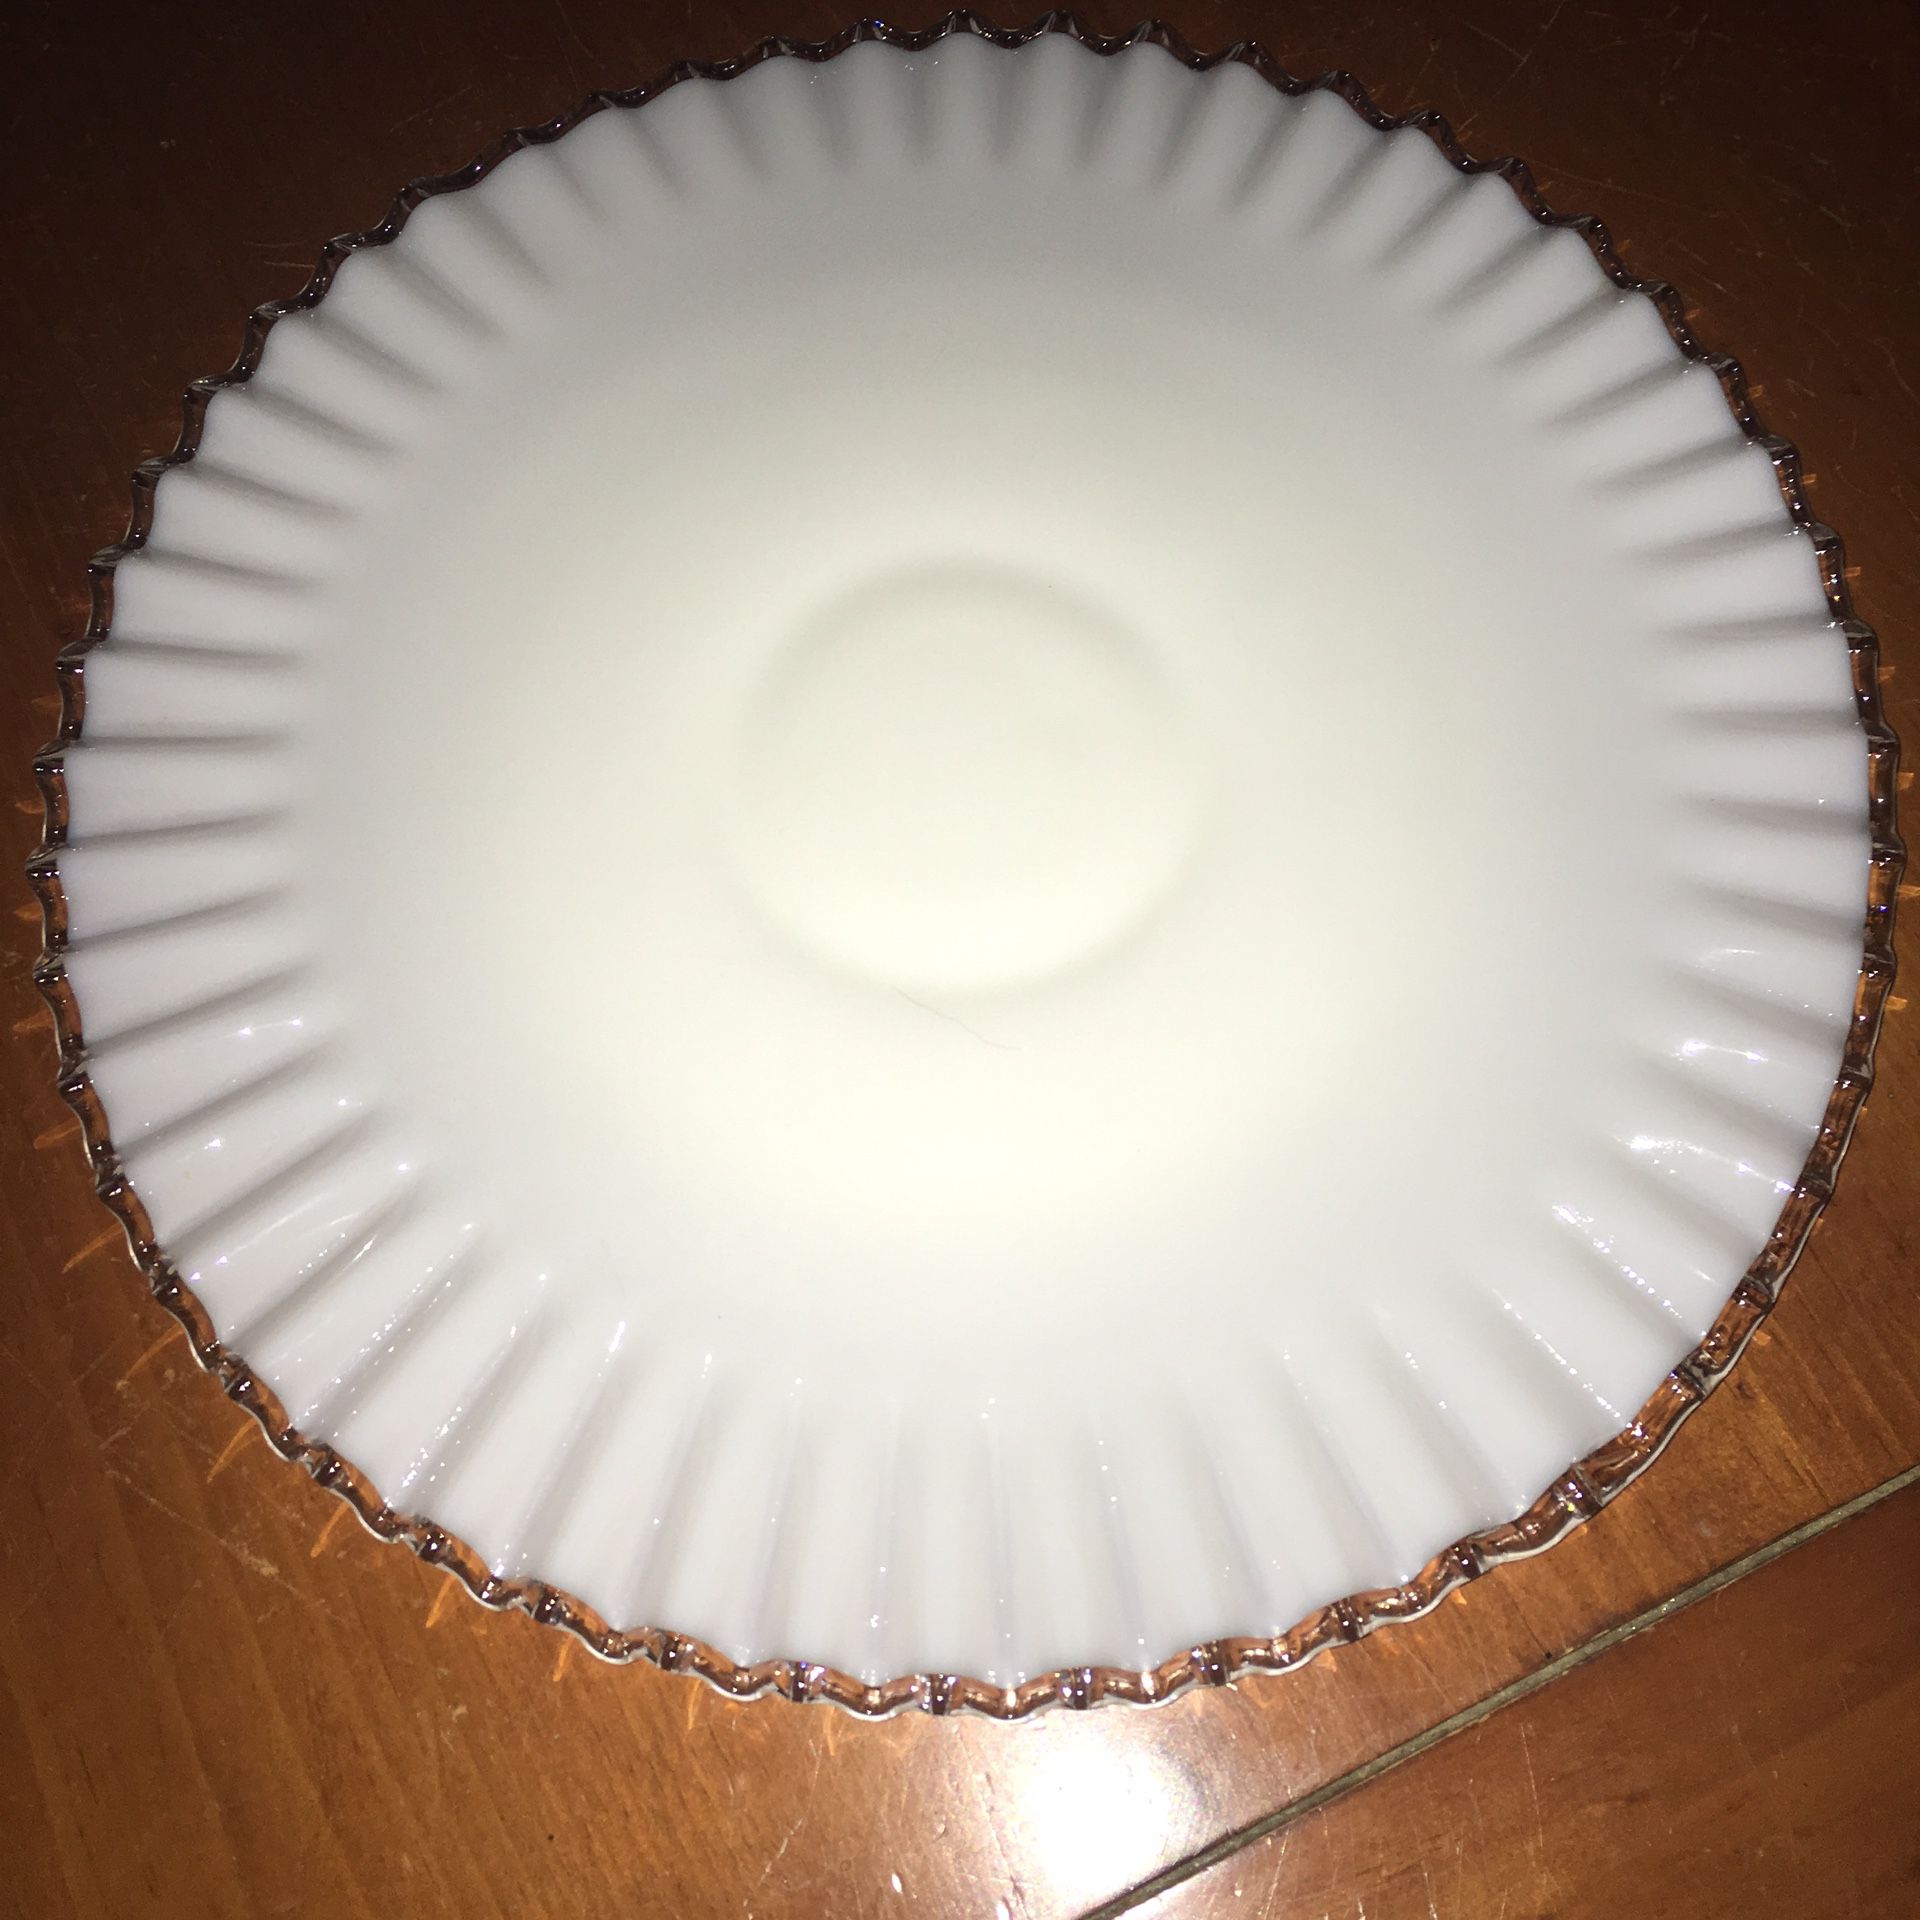 Fenton Silvercrest Milk Glass serving plate